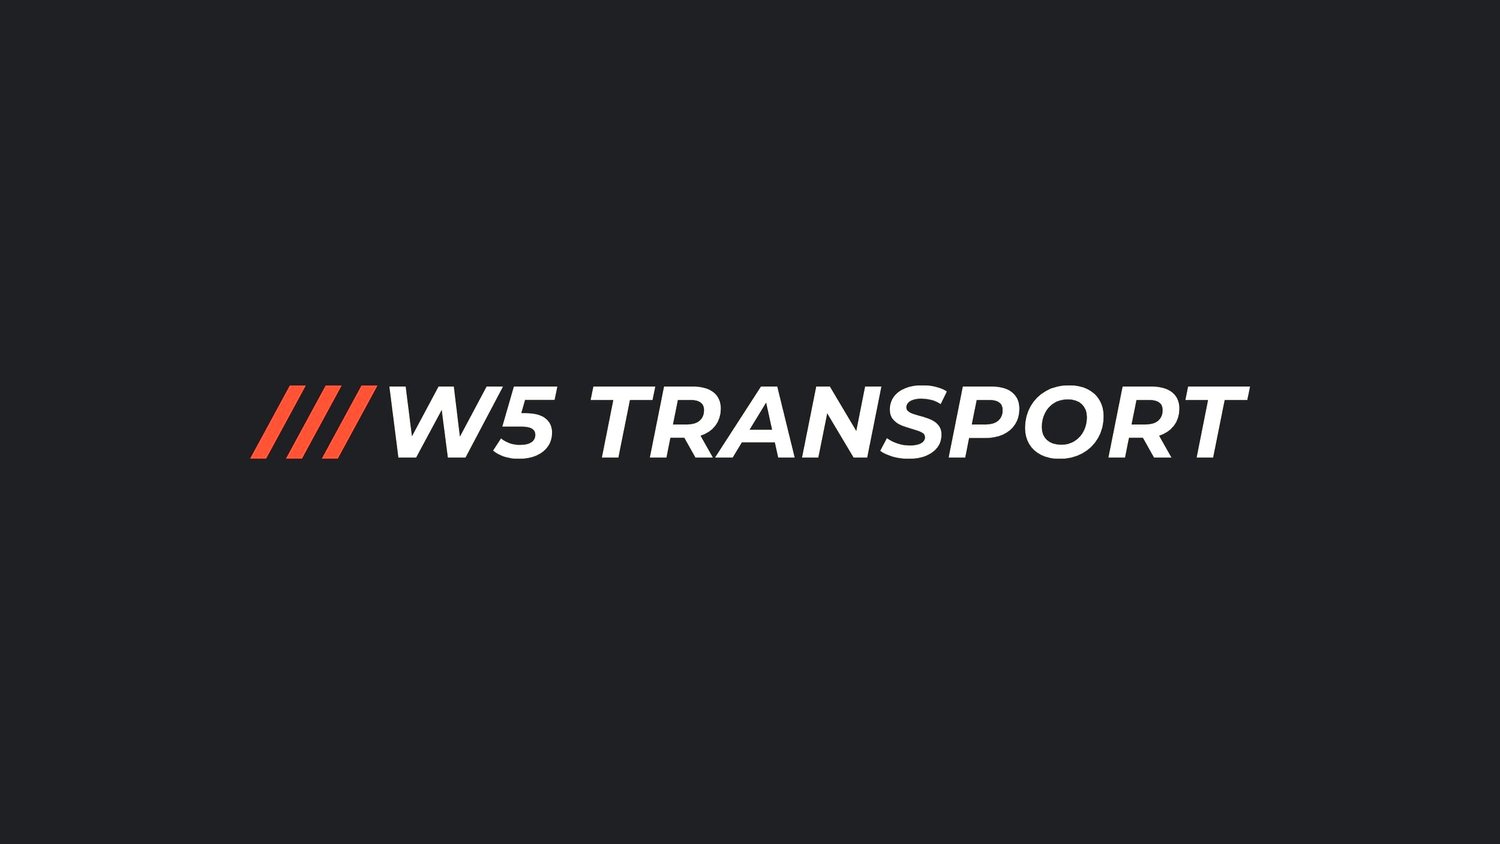 W5 Transport